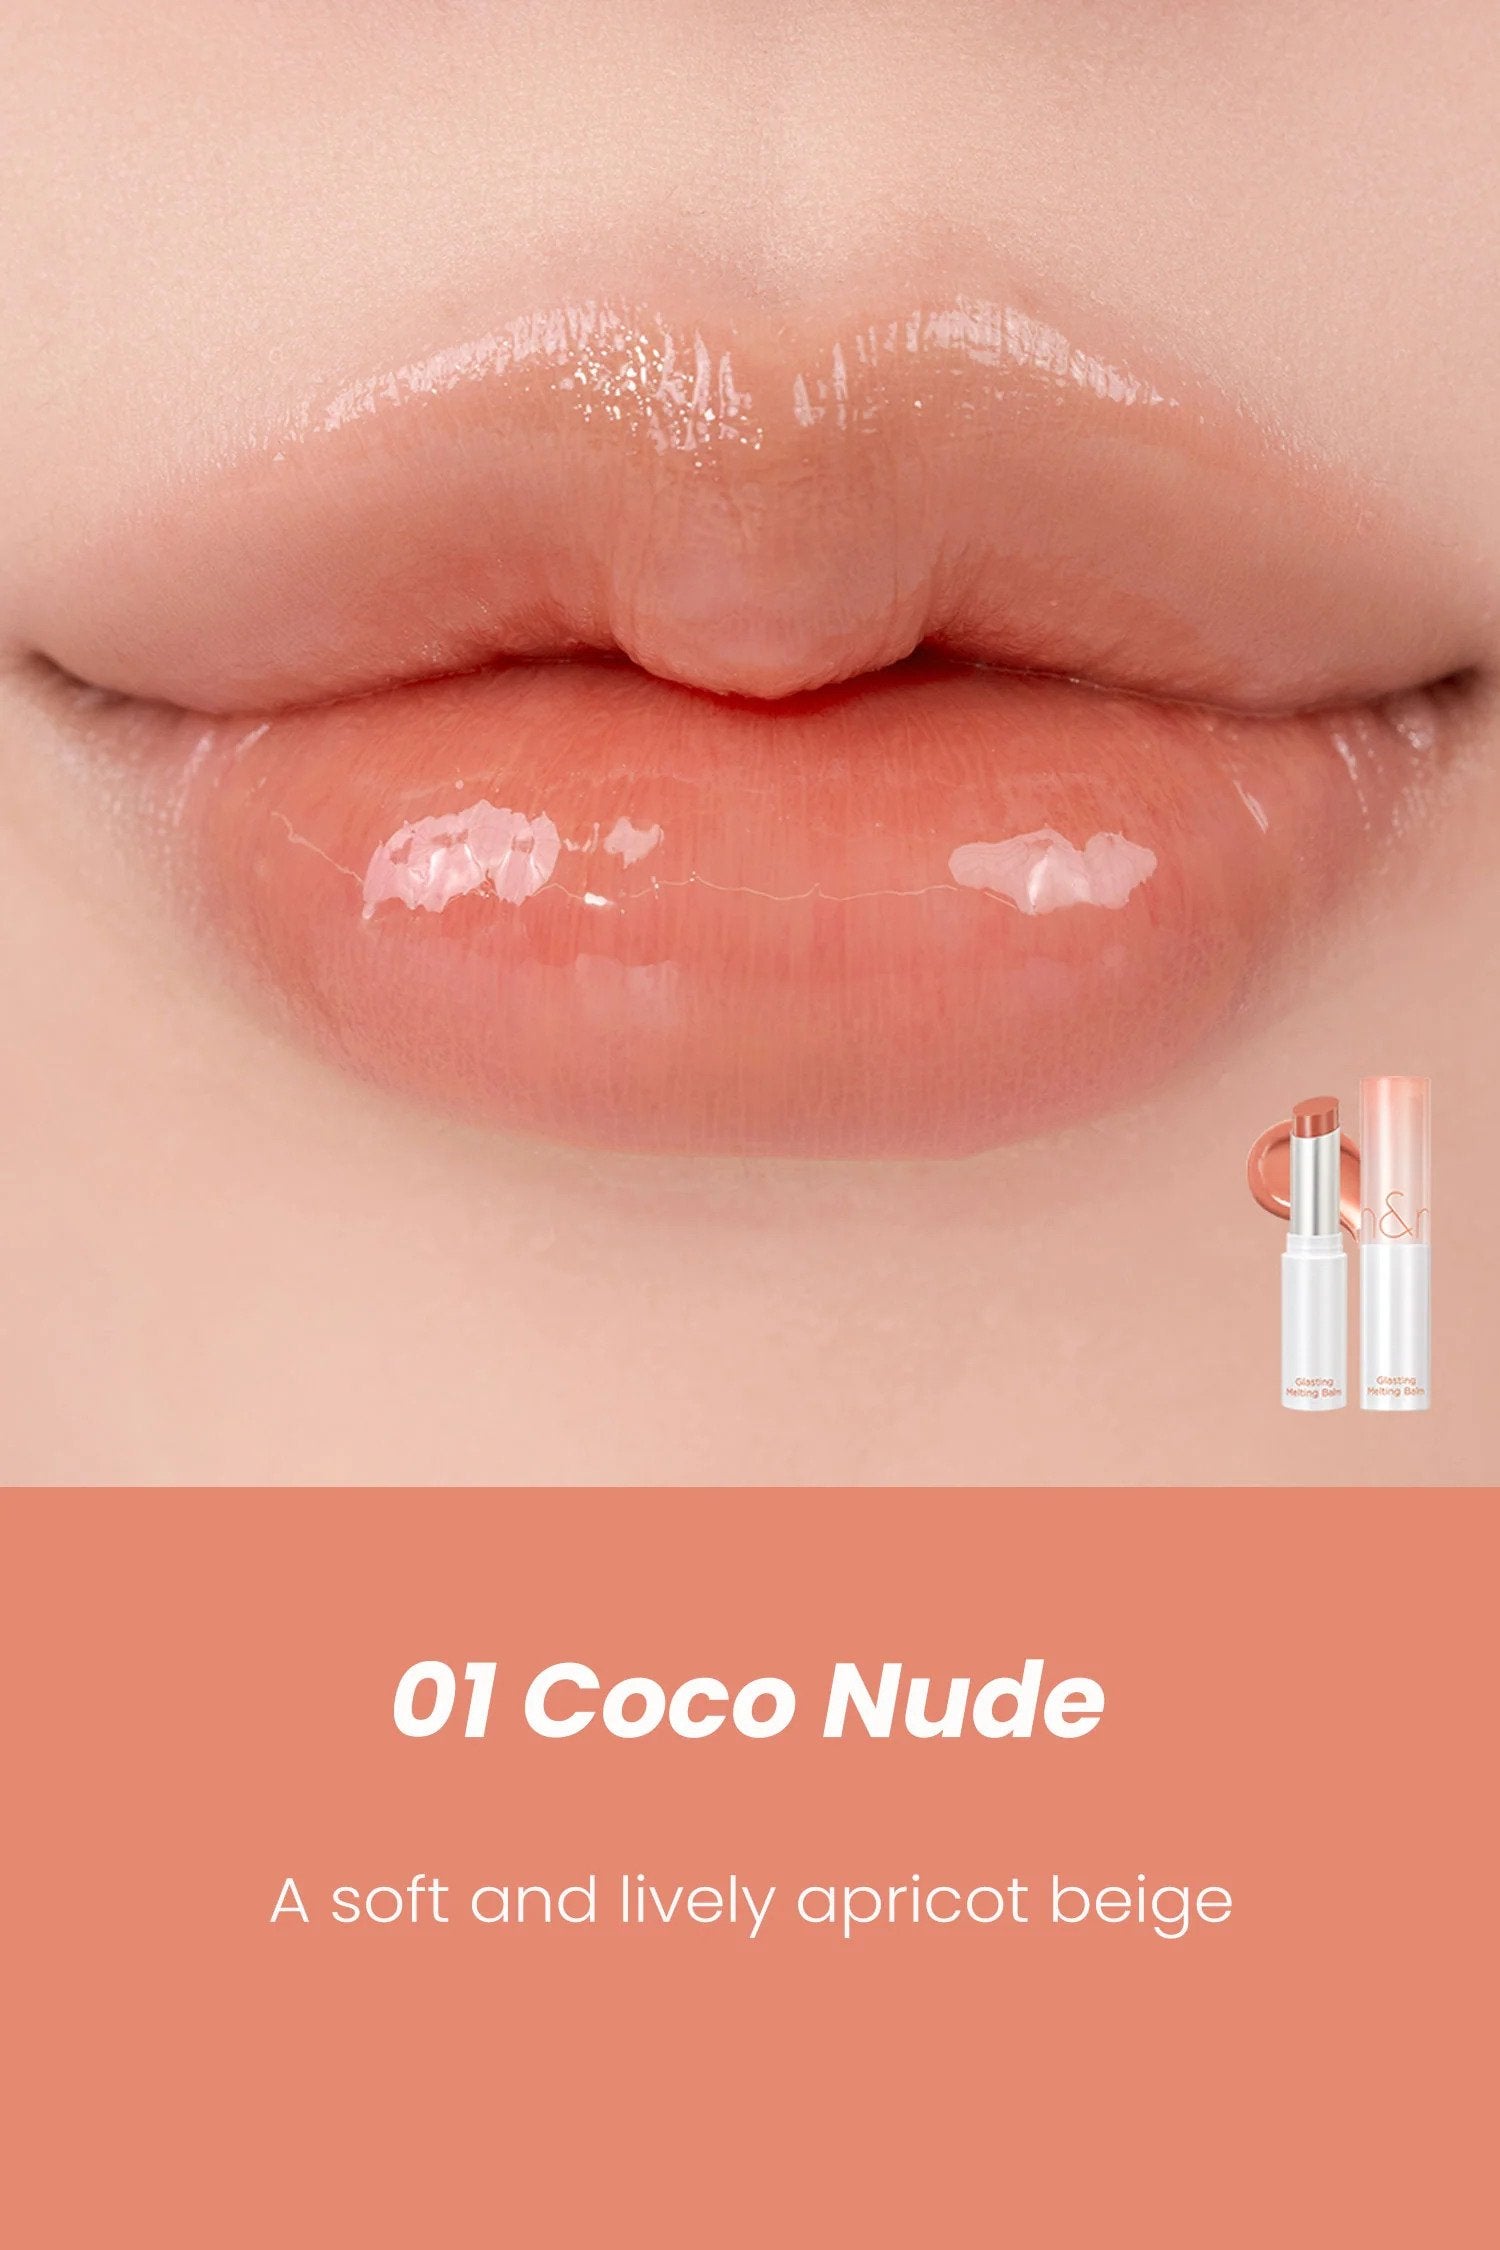 Rom&nd - Glasting Melting Balm 01 Coco Nude - بالم الزجاجي رقم 01 من روماند